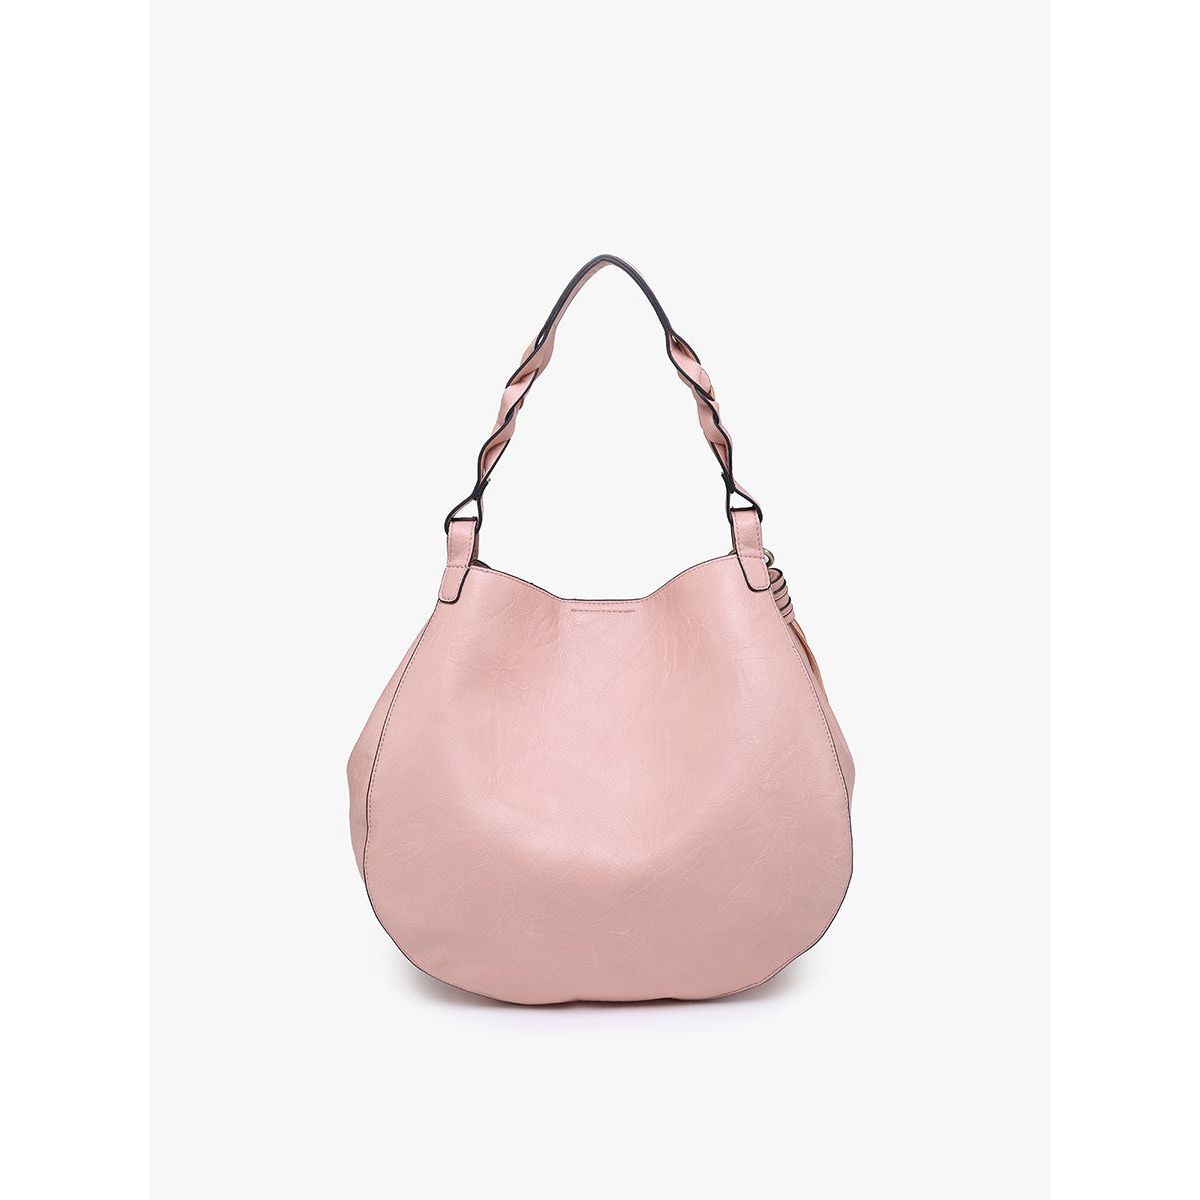 Eloise Handbag in Pink